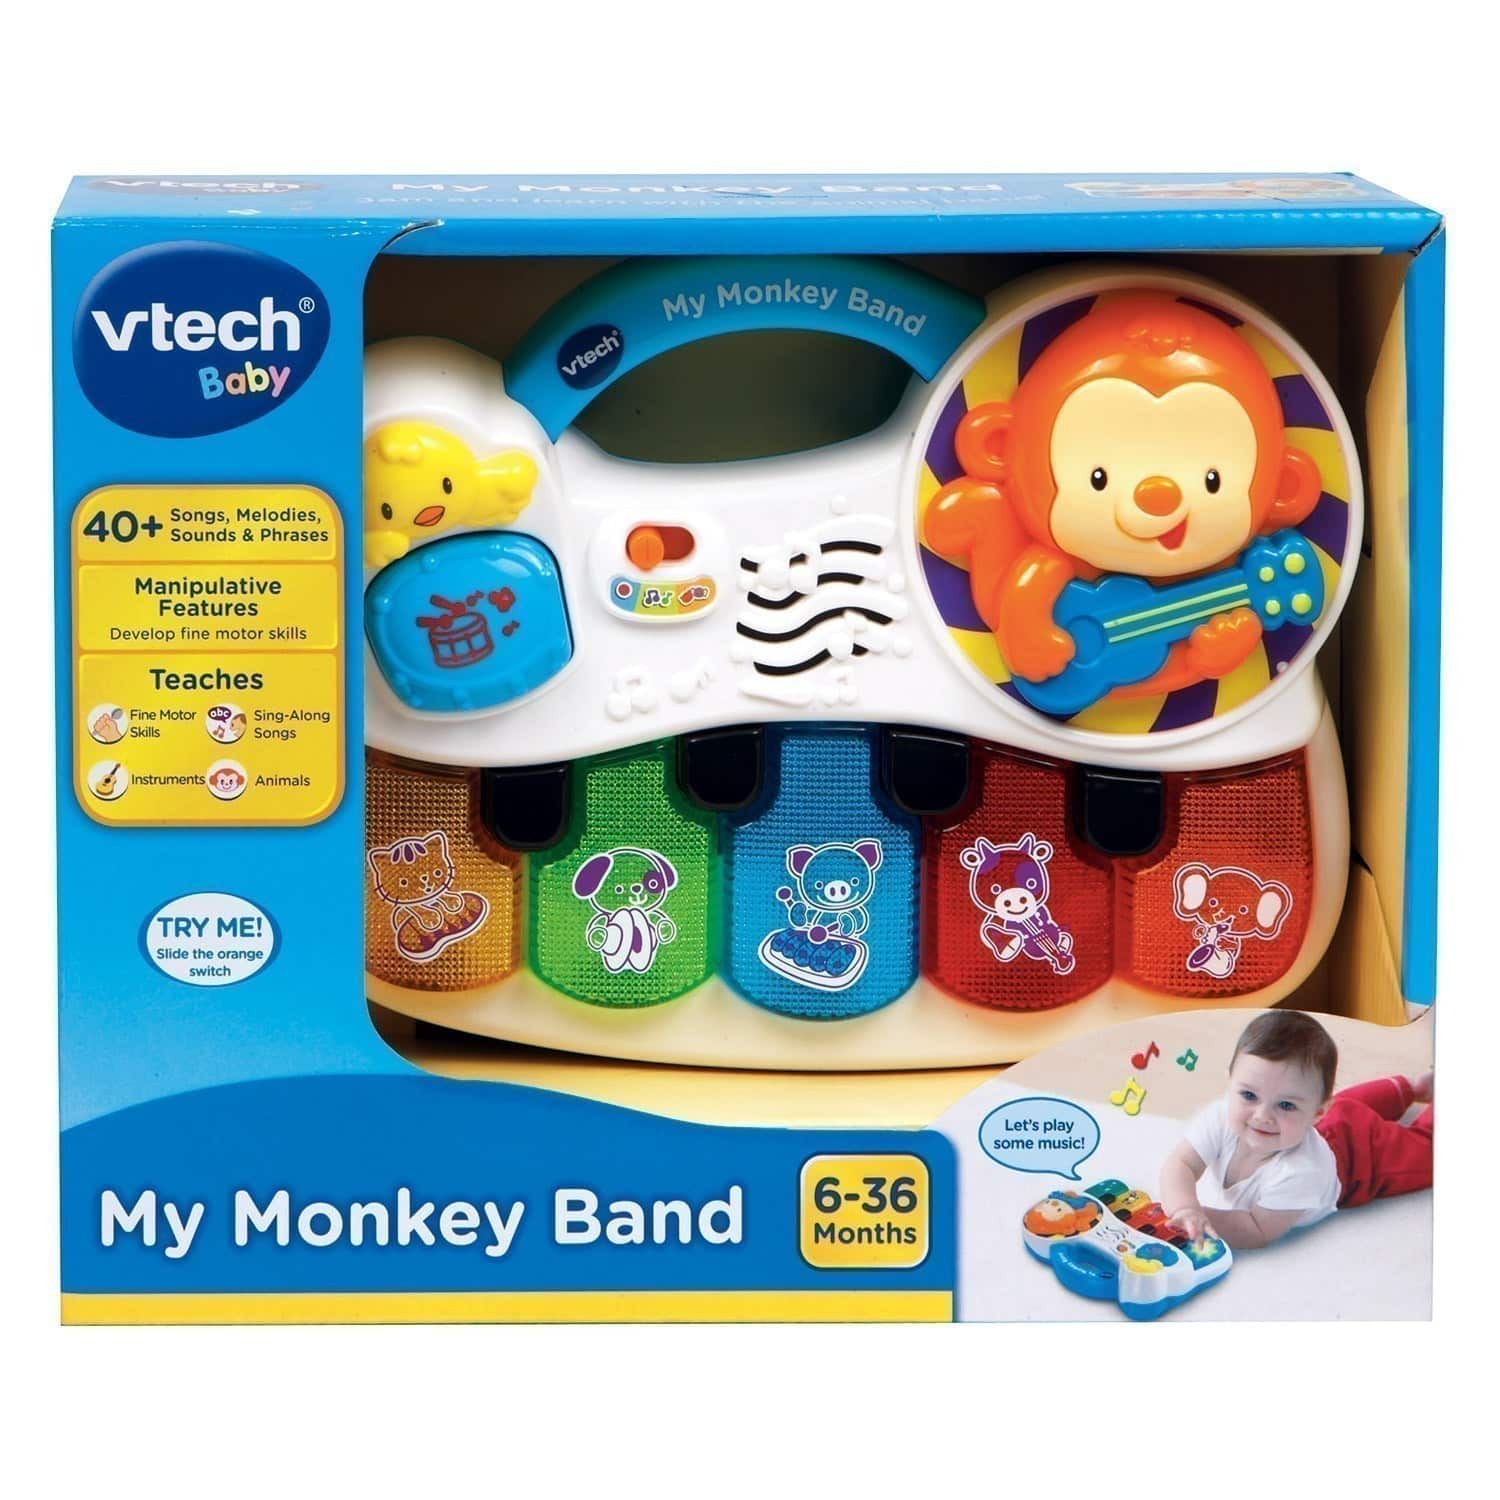 Vtech Baby - My Monkey Band